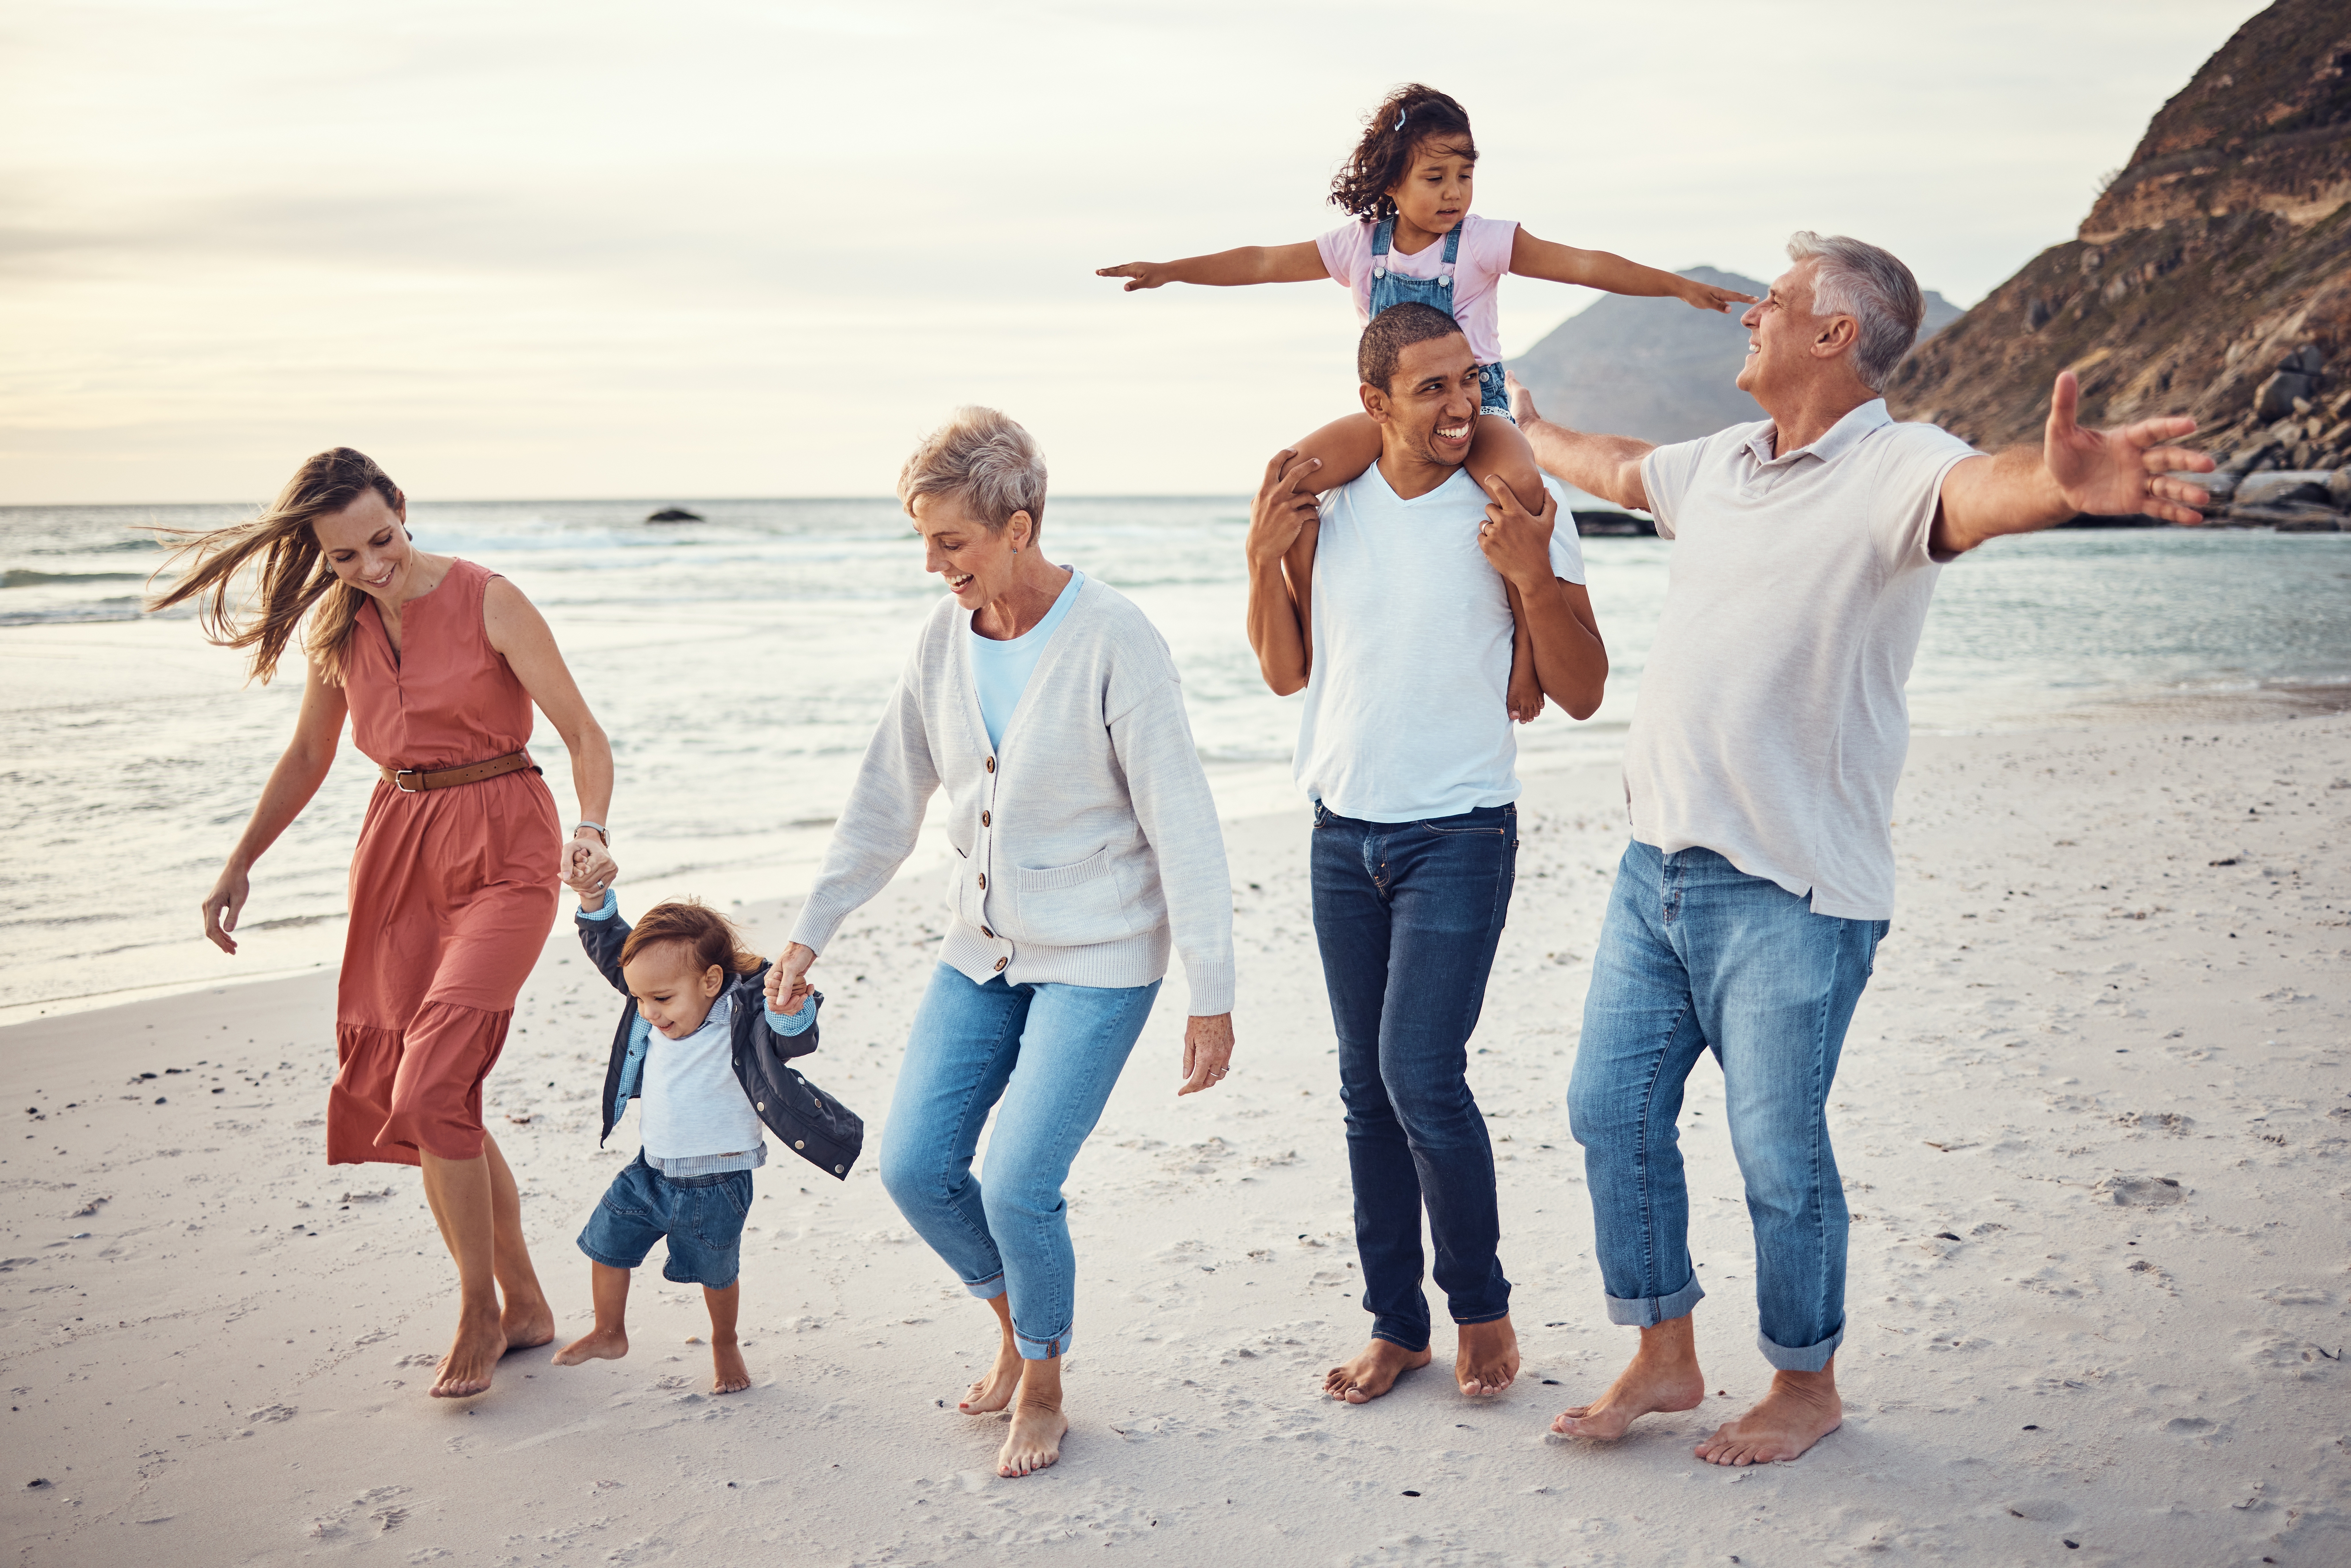 Une famille en vacances | Source : Shutterstock